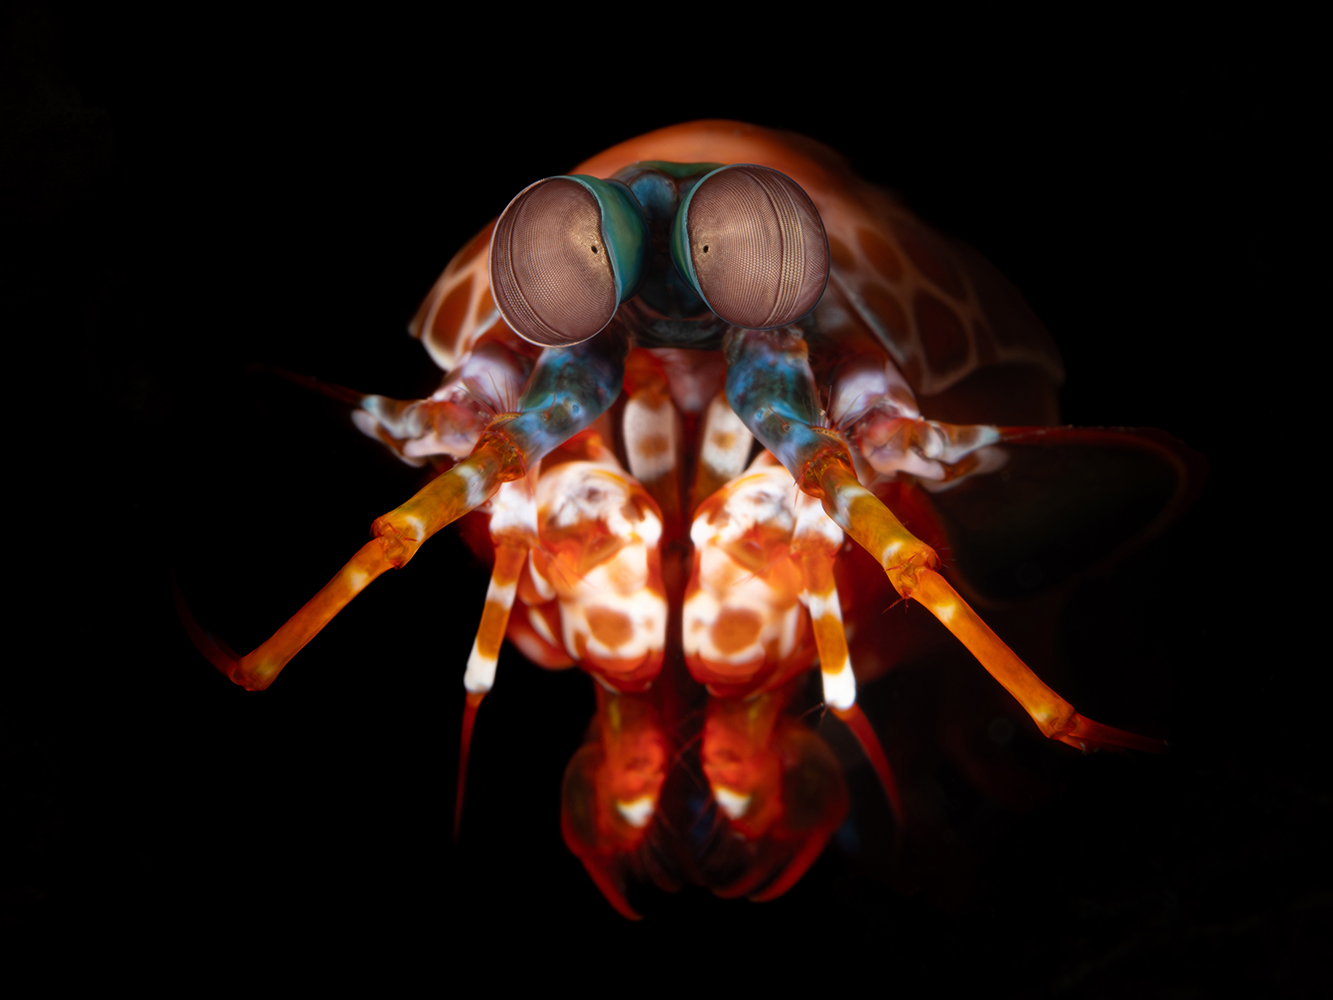 Colorful mantis shrimp in Alor, Indonesia.